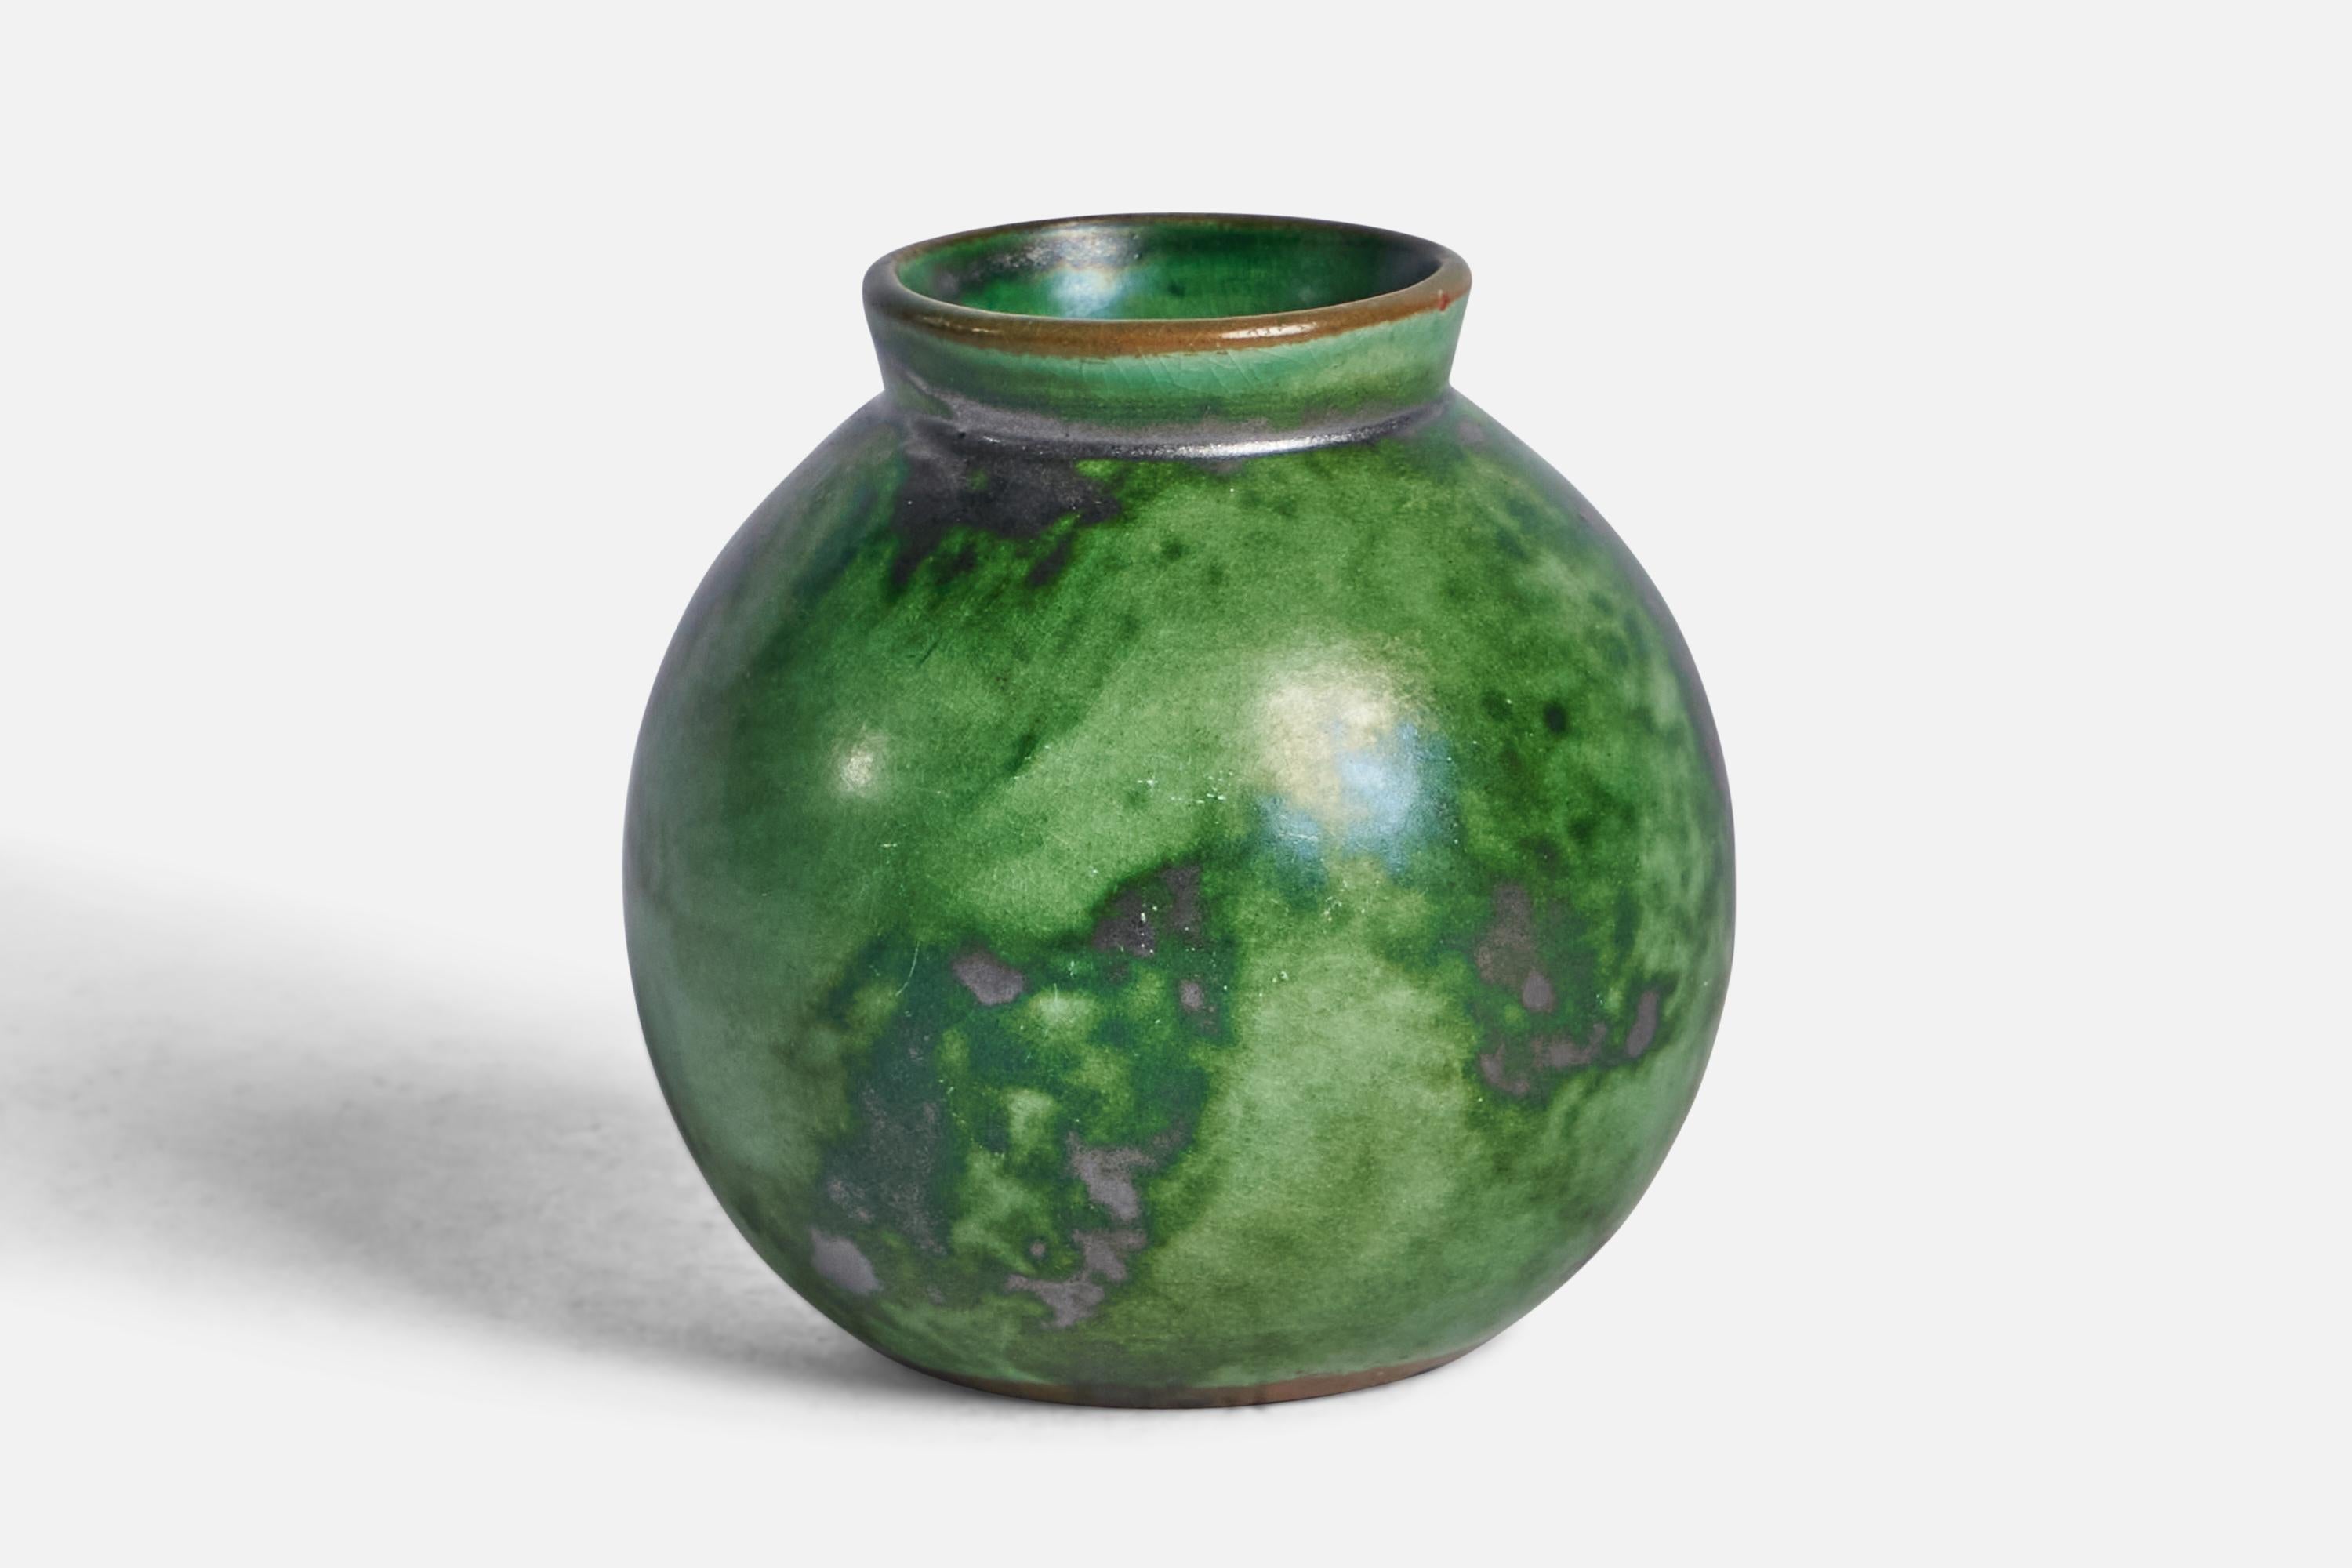 A green-glazed earthenware vase designed by Erik Mornils and produced by Nittsjö, Sweden, 1930s.